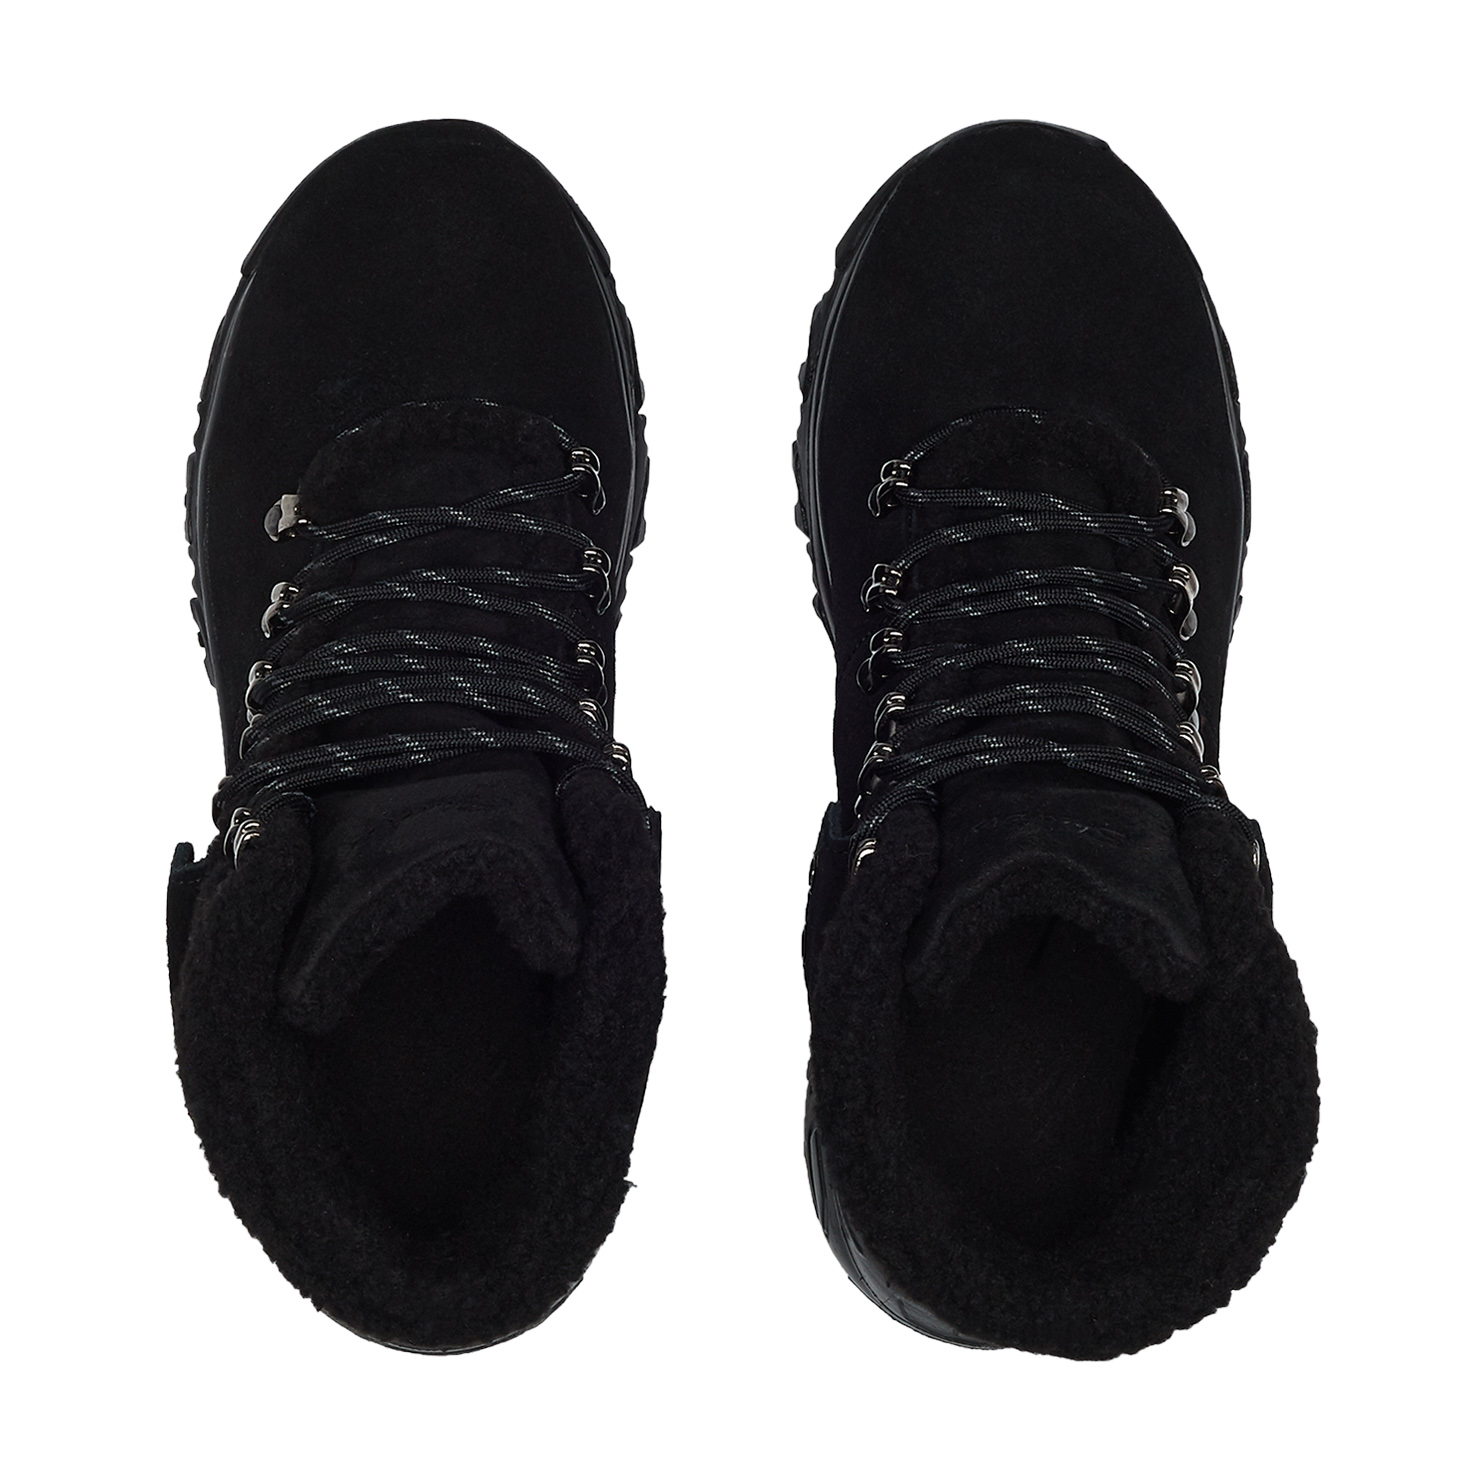 Women's boots SKECHERS, размер 36, цвет черный SK167087 - фото 3